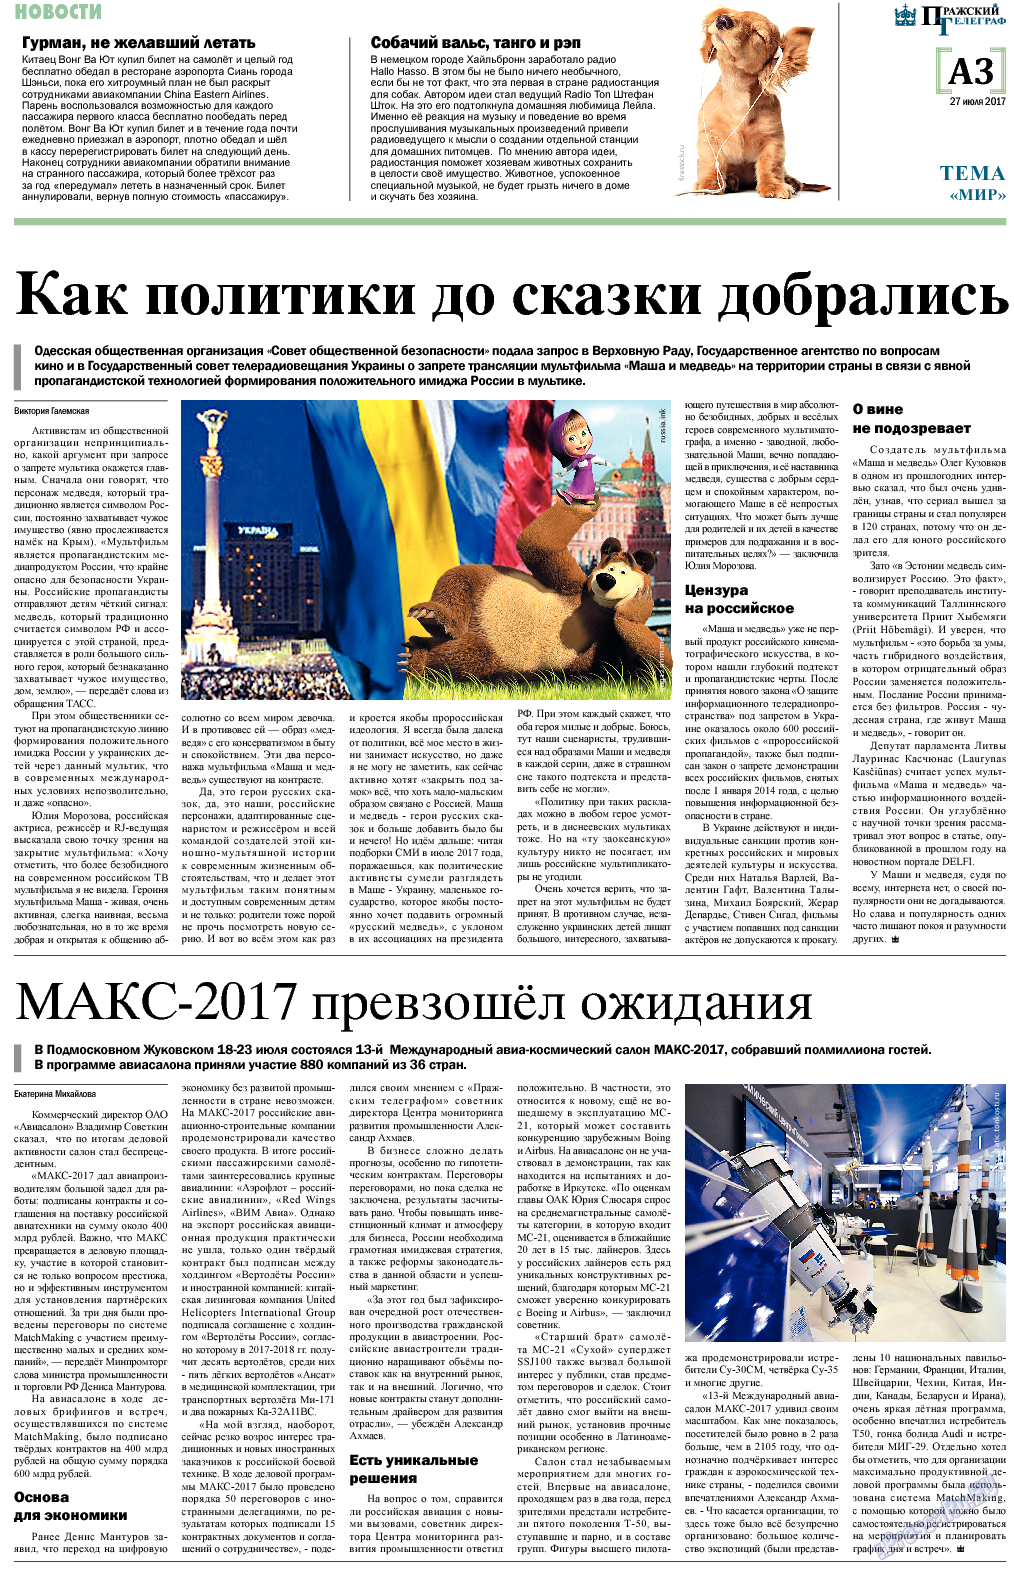 Пражский телеграф, газета. 2017 №29 стр.3